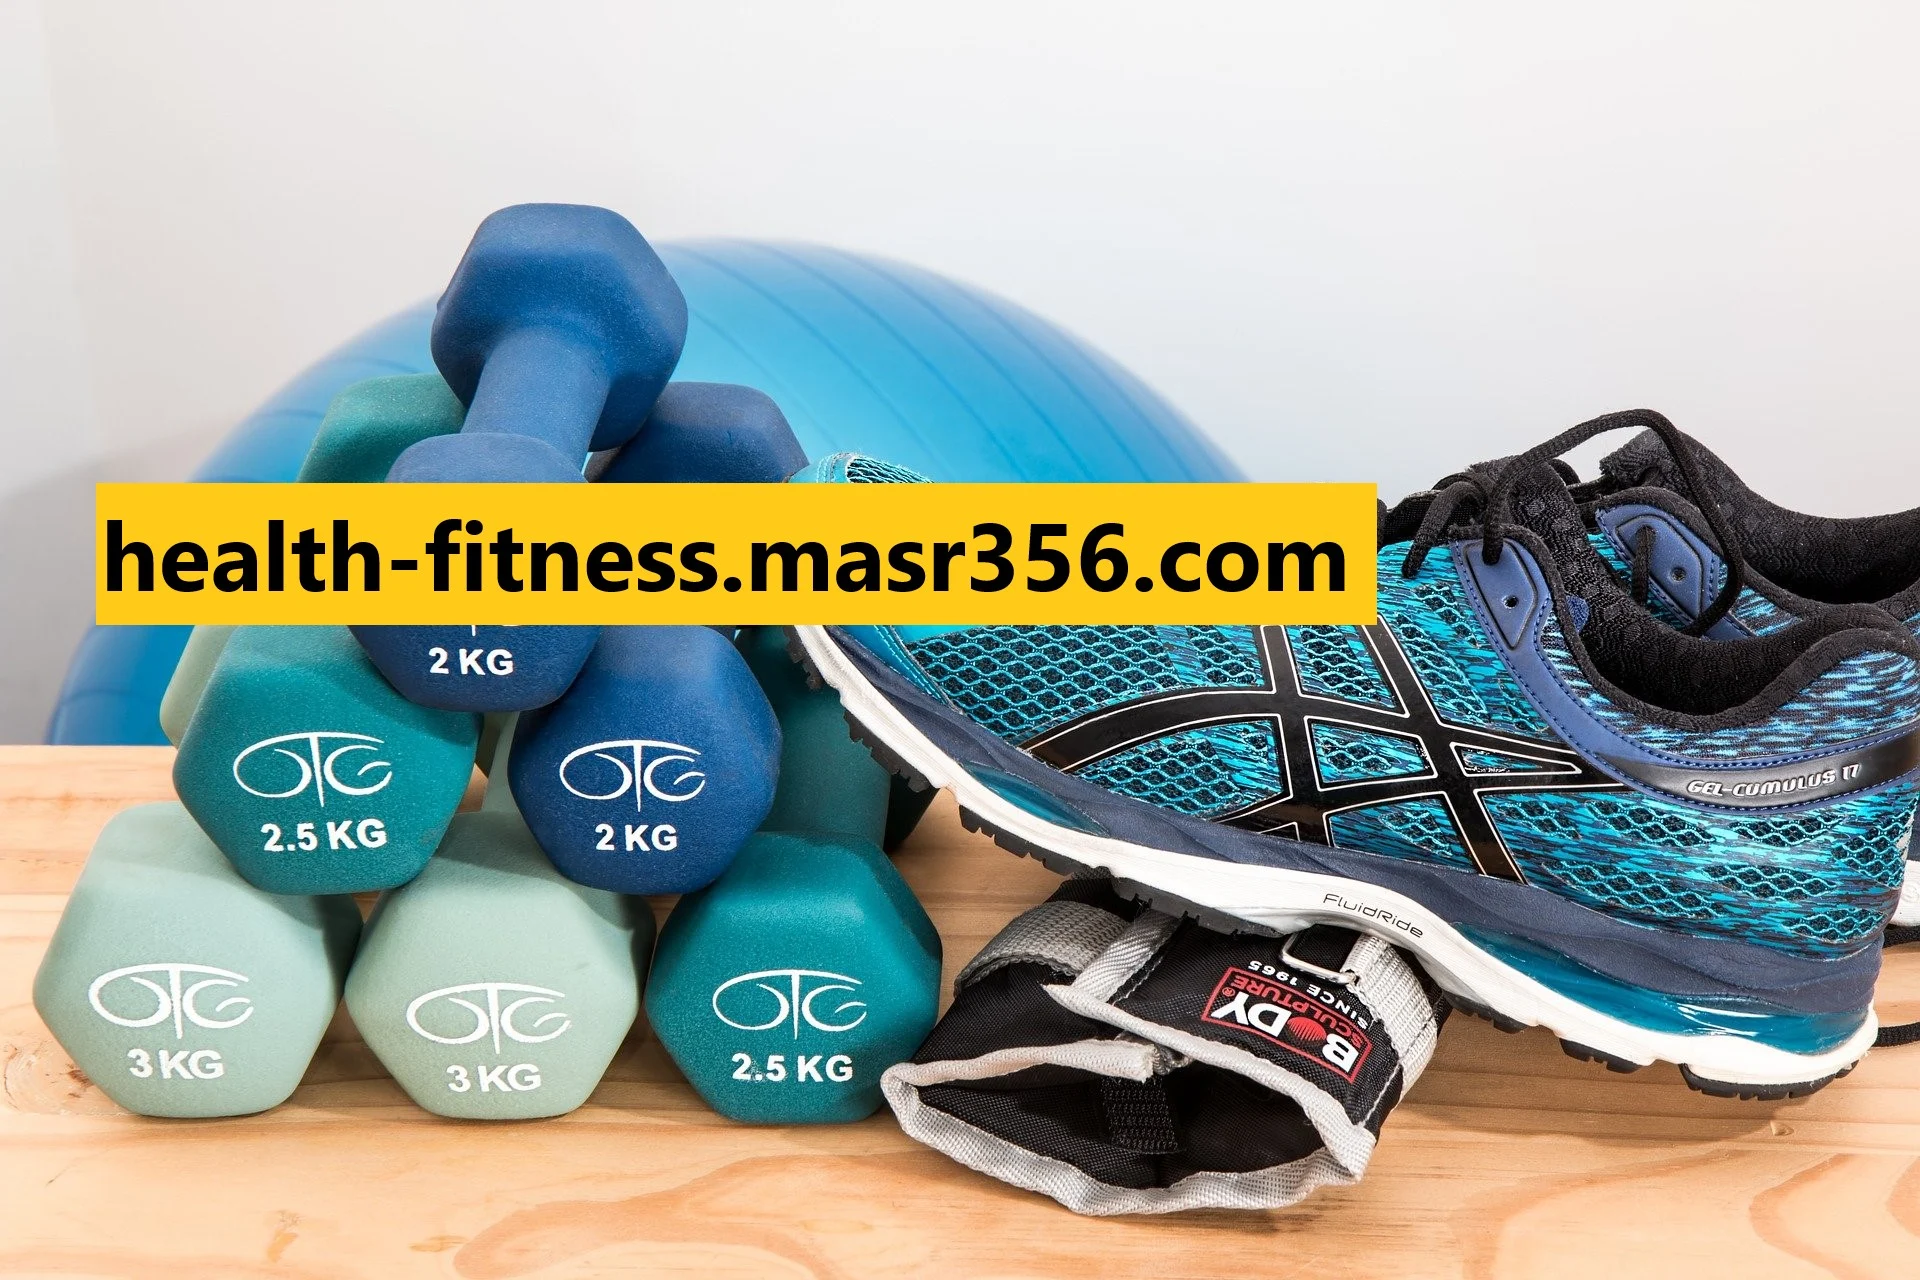 health-fitness.masr356.com